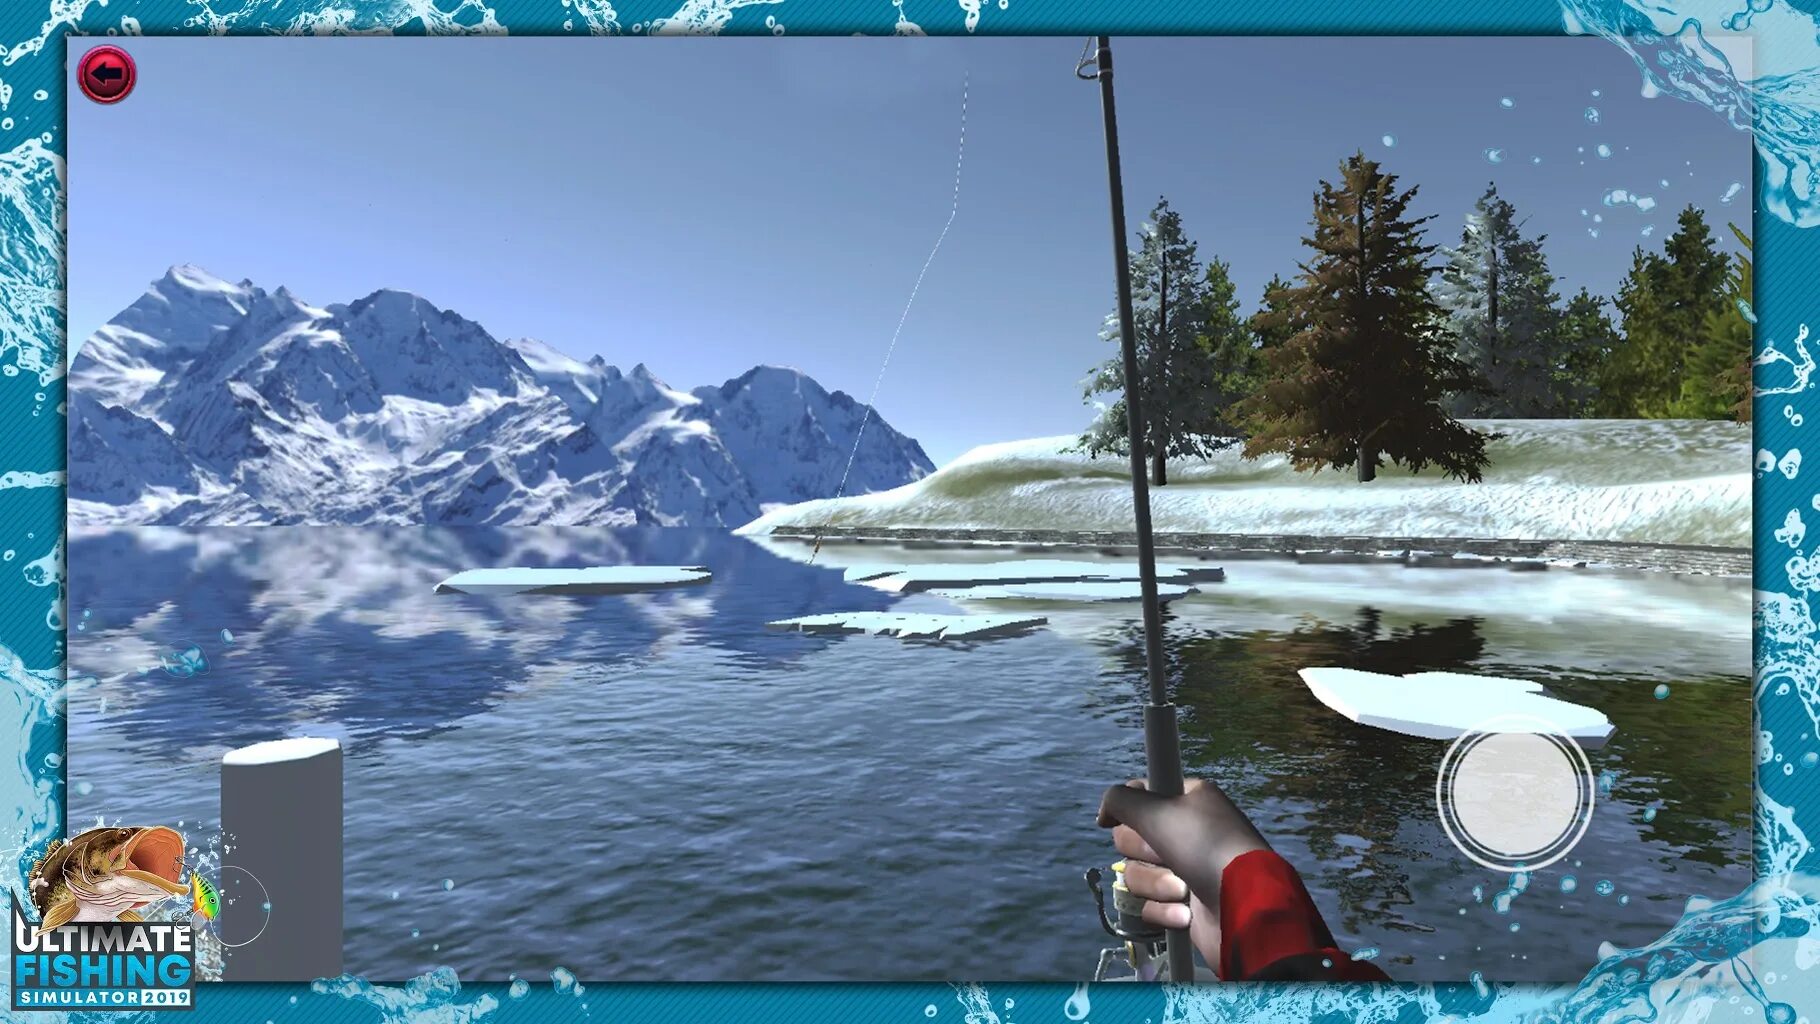 Игра рыбалка все открыто. Игра Ultimate Fishing Simulator. Симулятор рыбалки на лодке. Игры про рыбалку на андроид. Алтимейт фишинг симулятор.